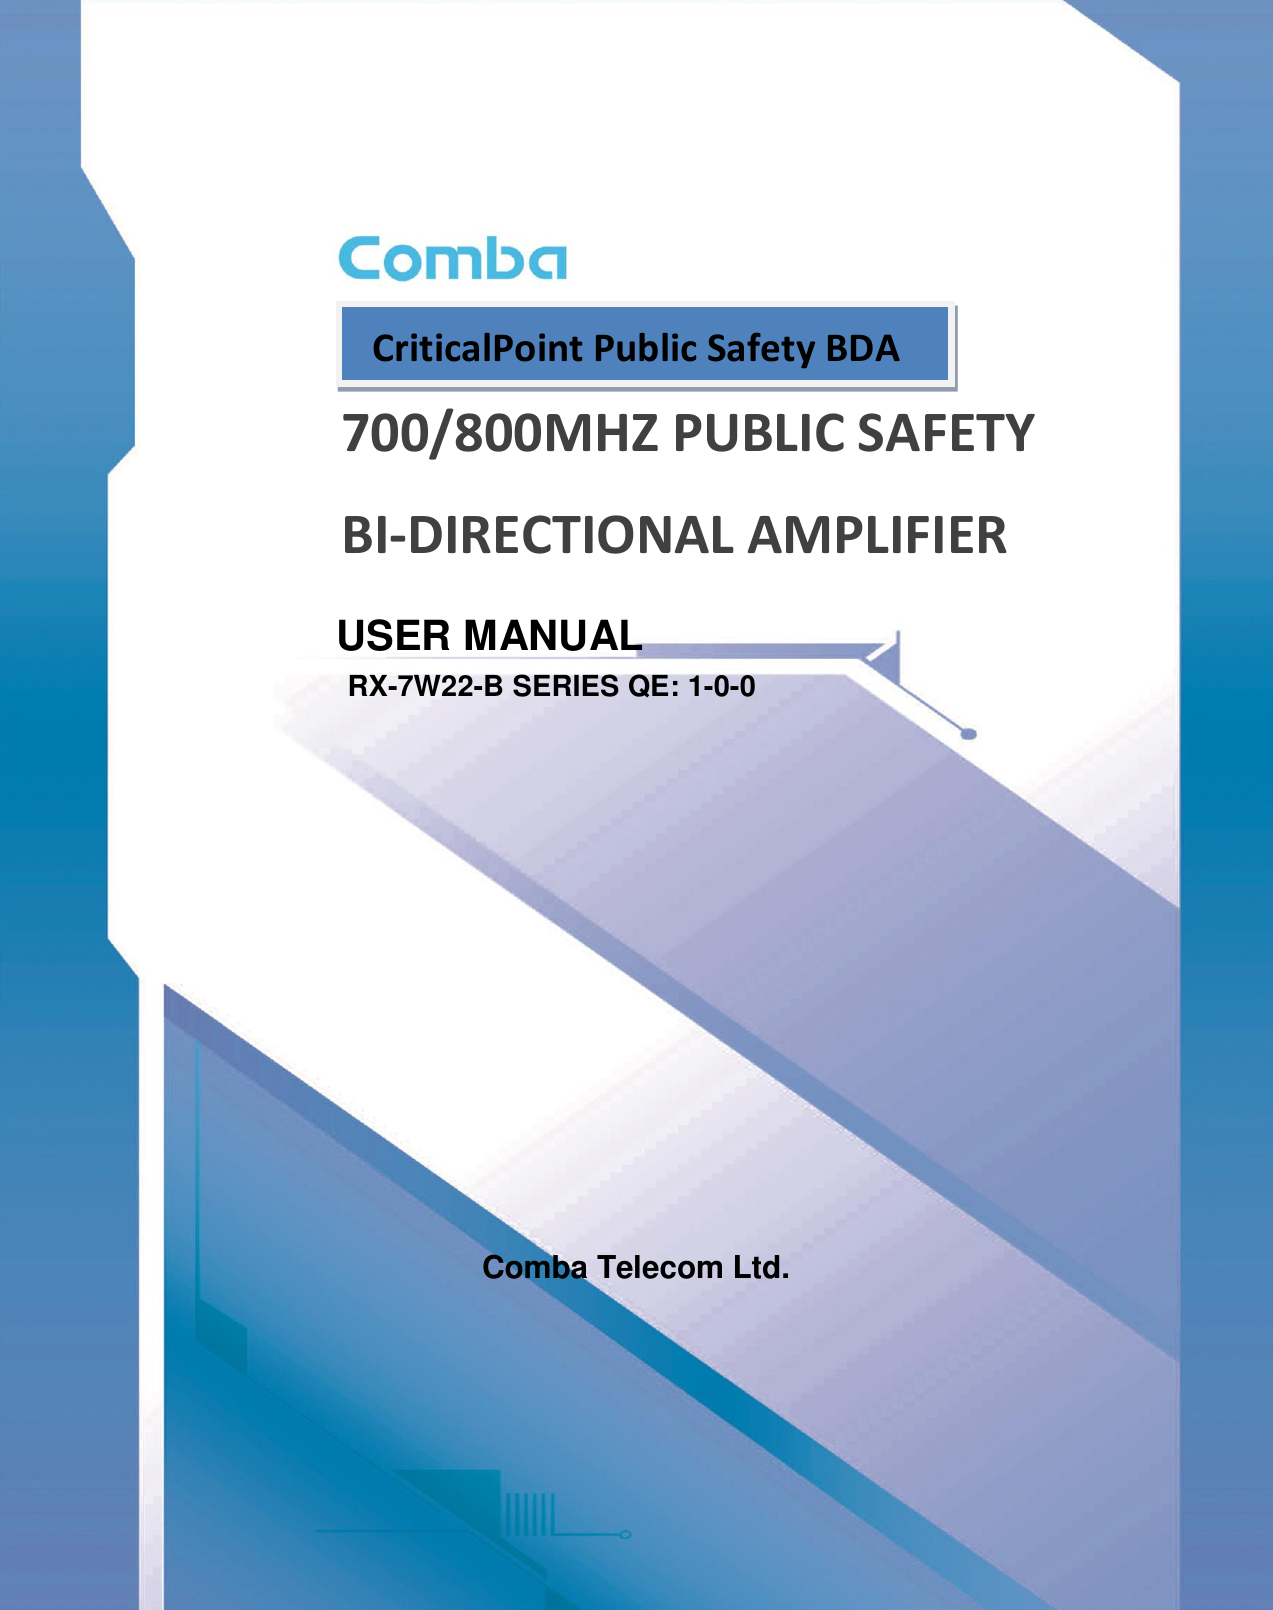      700/800MHZ PUBLIC SAFETY BI-DIRECTIONAL AMPLIFIER USER MANUAL RX-7W22-B SERIES QE: 1-0-0            Comba Telecom Ltd.     CriticalPoint Public Safety BDA 